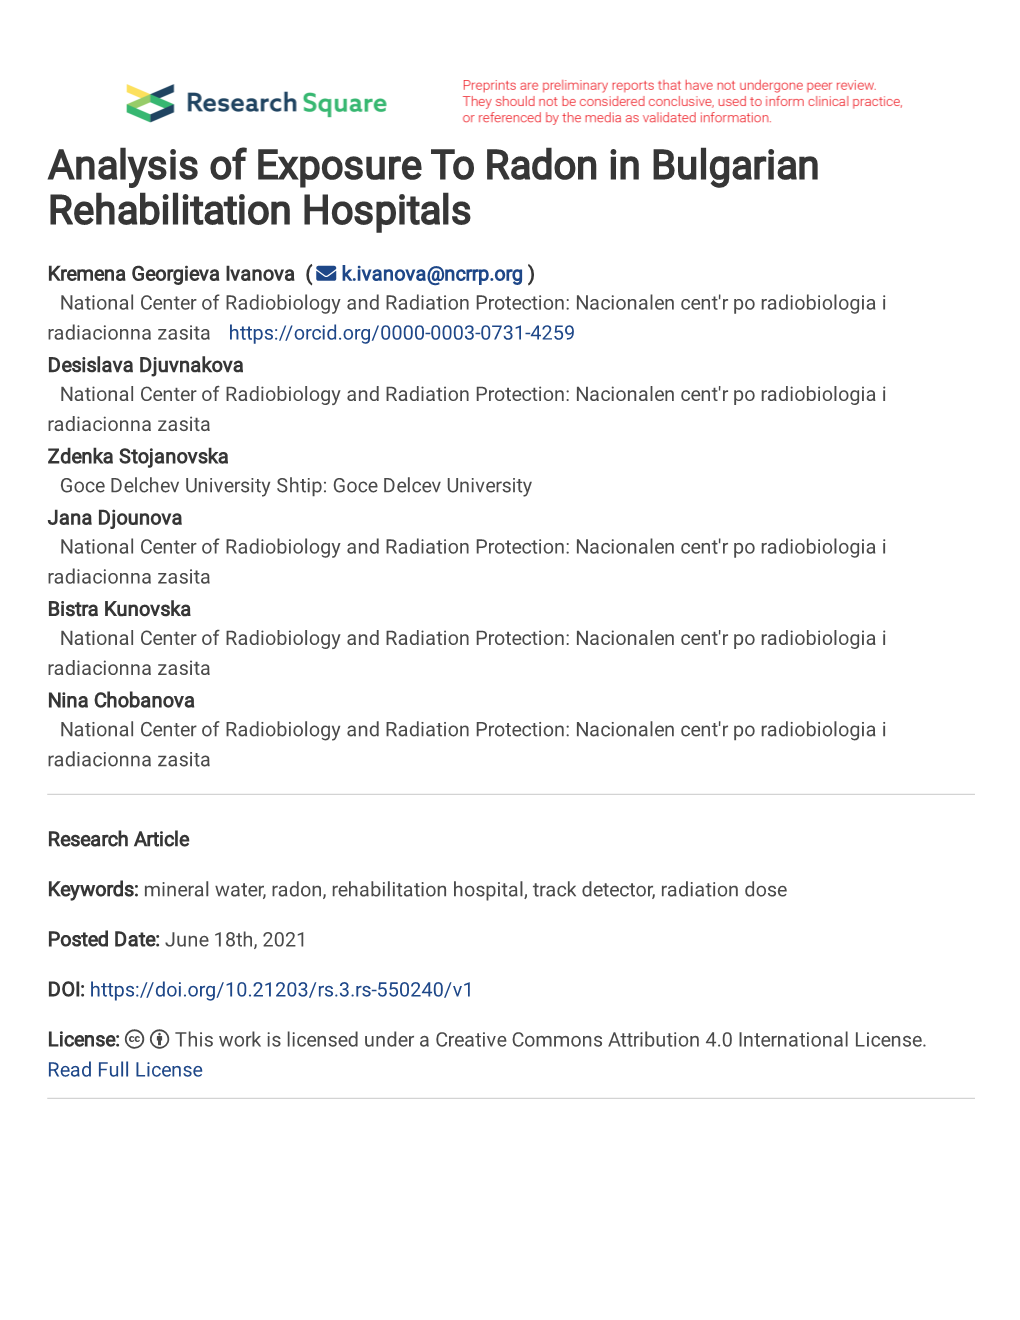 Analysis of Exposure to Radon in Bulgarian Rehabilitation Hospitals